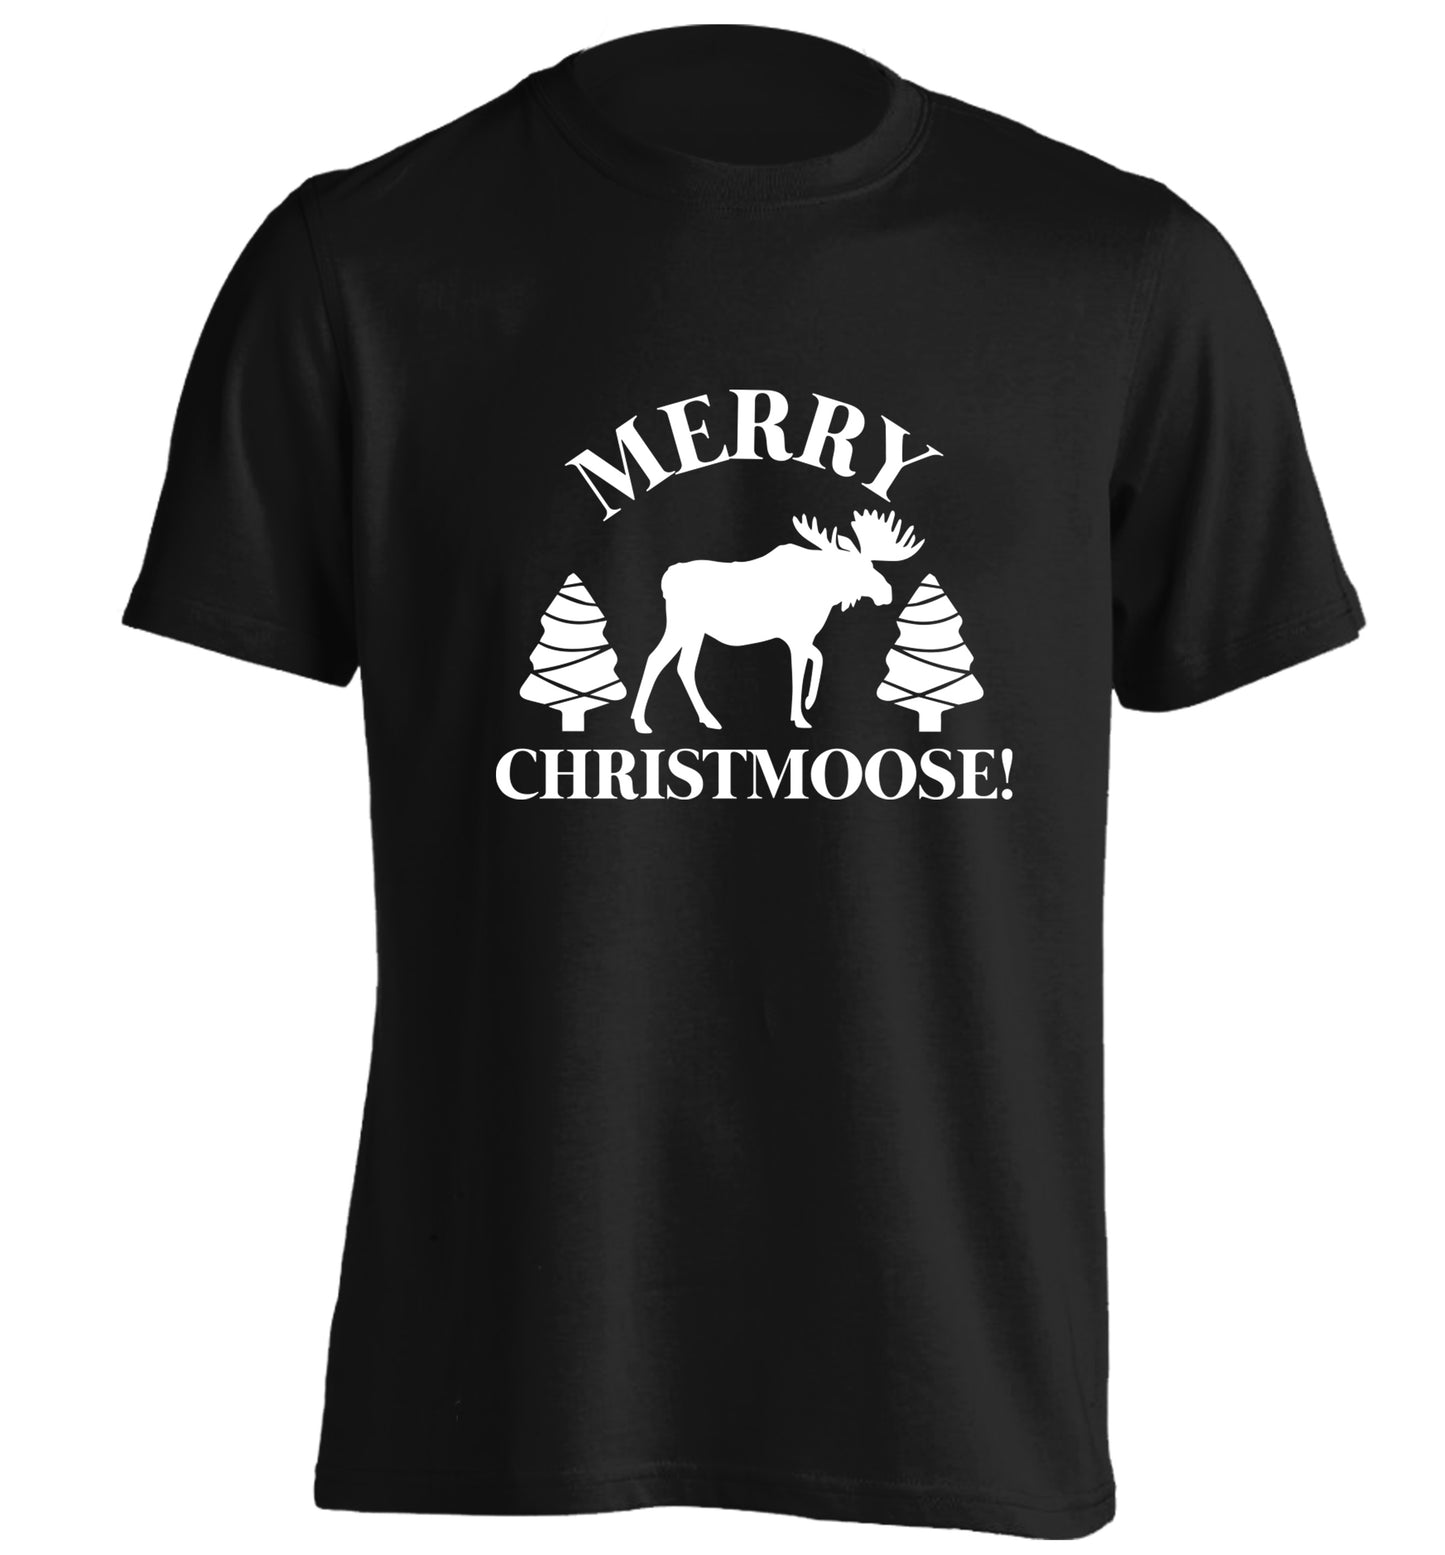 Merry Christmoose adults unisex black Tshirt 2XL